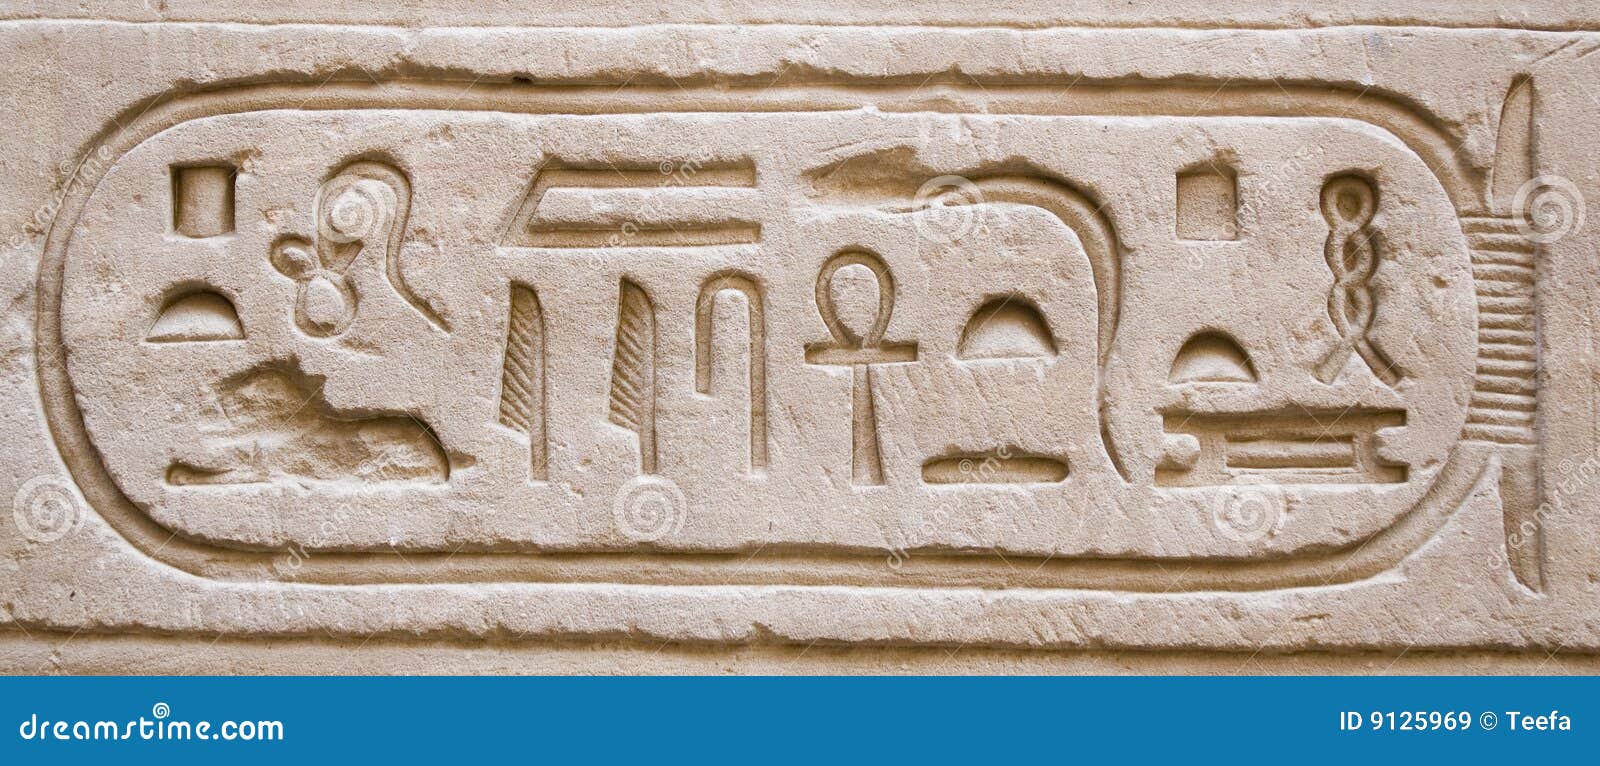 hieroglyphics on the wall